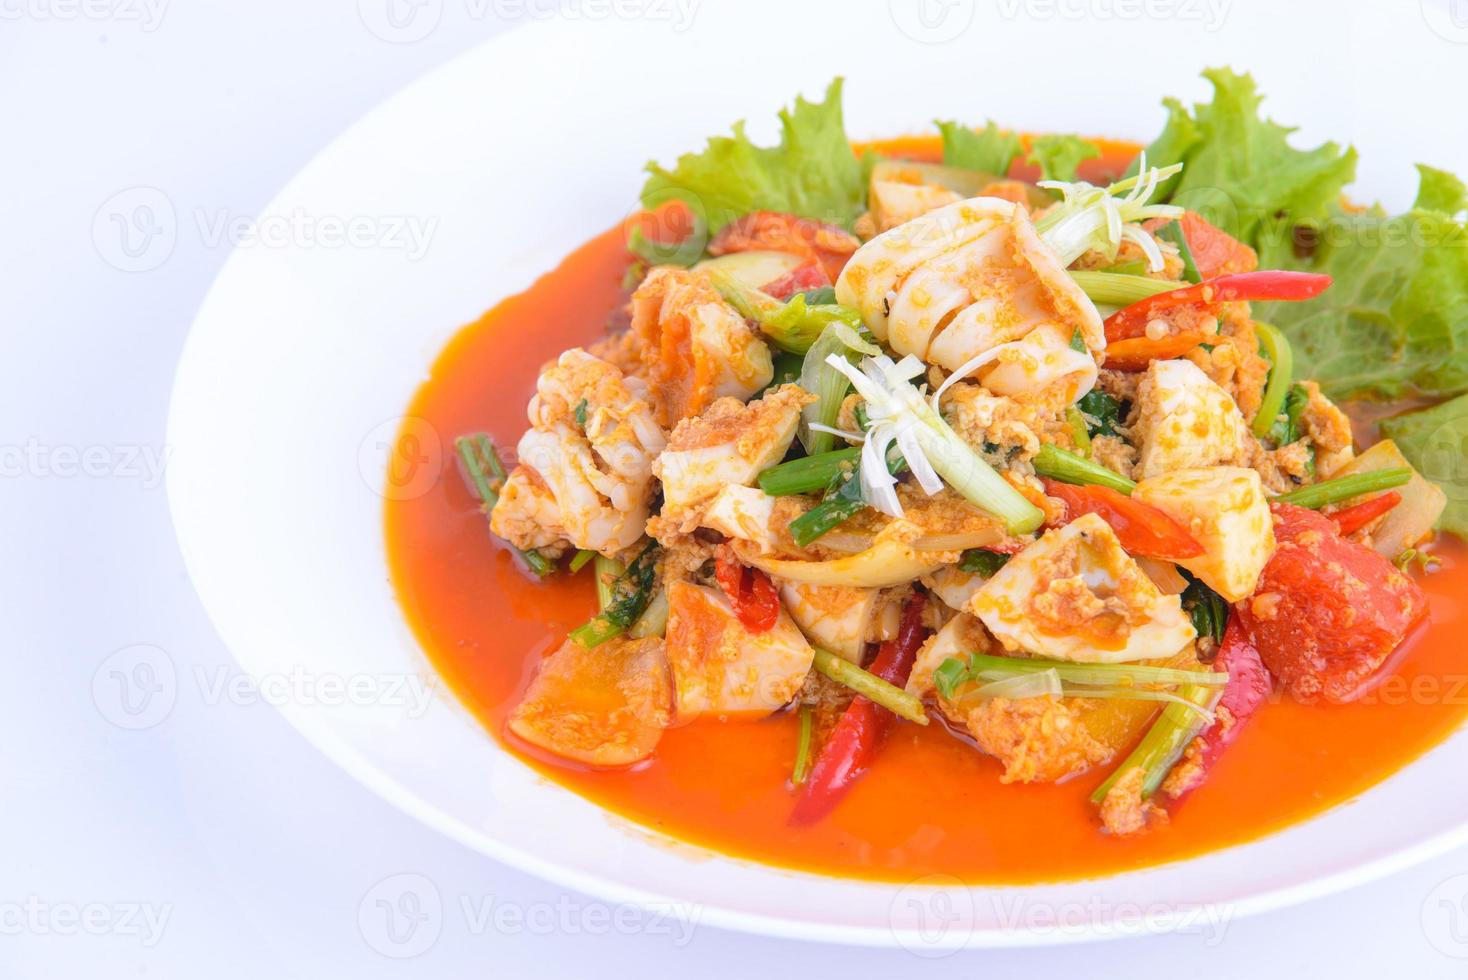 comida tailandesa favorita. mexa lulas fritas com curry no prato branco. foto